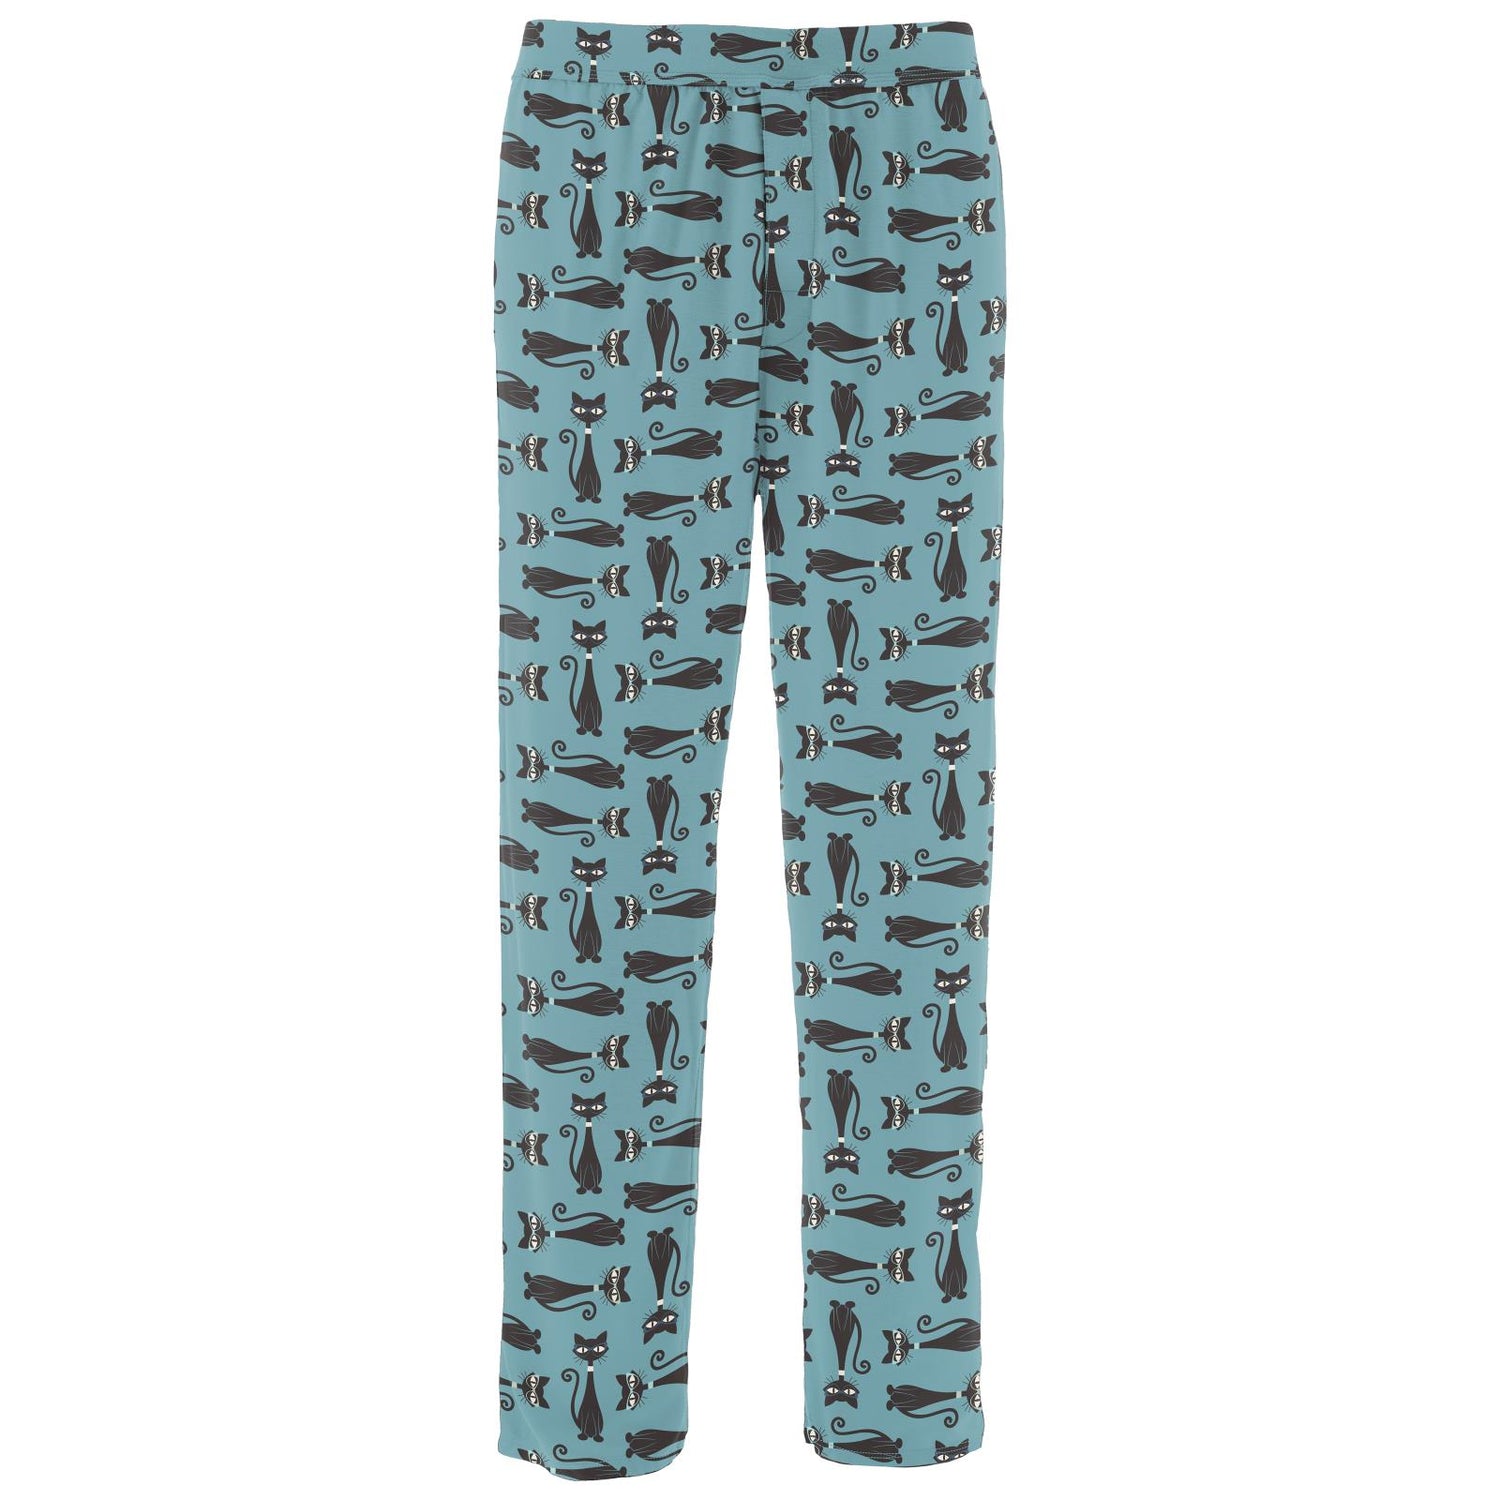 Men's Print Pajama Pants in Glacier Cool Cats